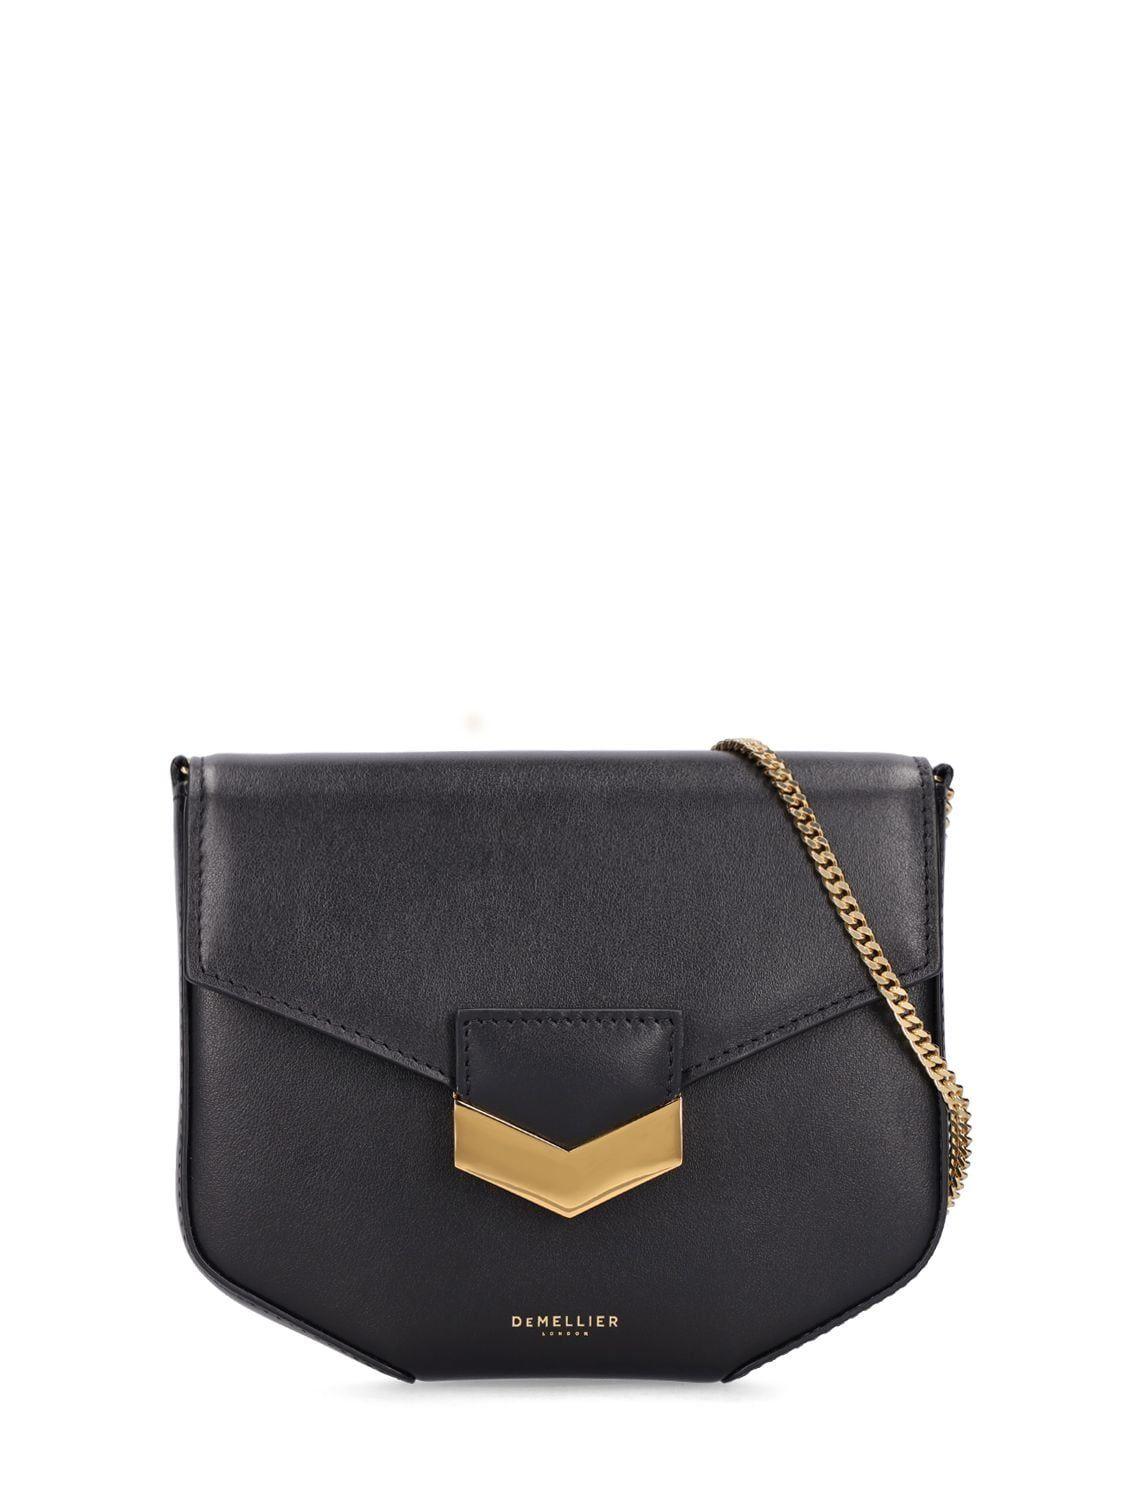 DeMellier Mini London Leather Shoulder Bag in Black | Lyst